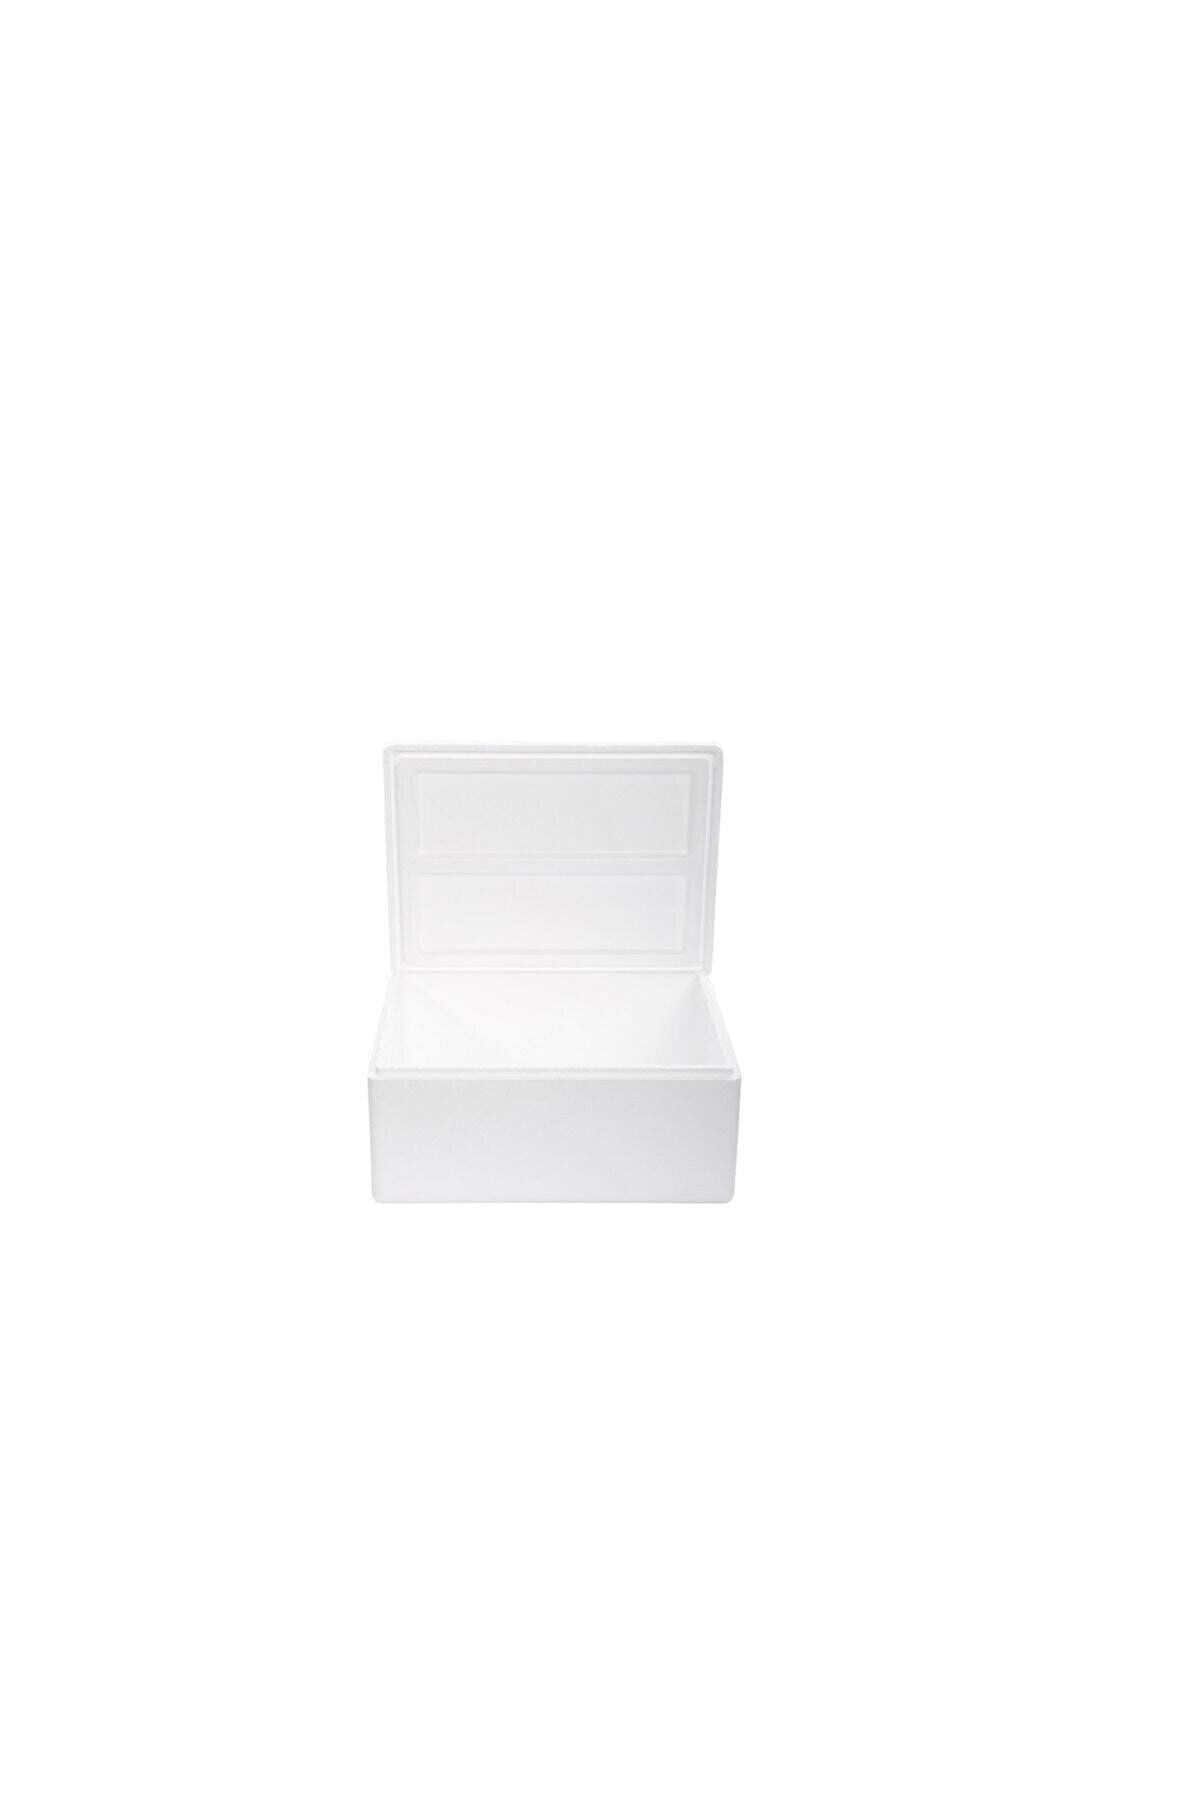 Nefes Sağlık Beyaz Strafor Köpük Kutu (56x43x30) Cm 20 Kg - 1 Adet K-1 ( 1 Adet)